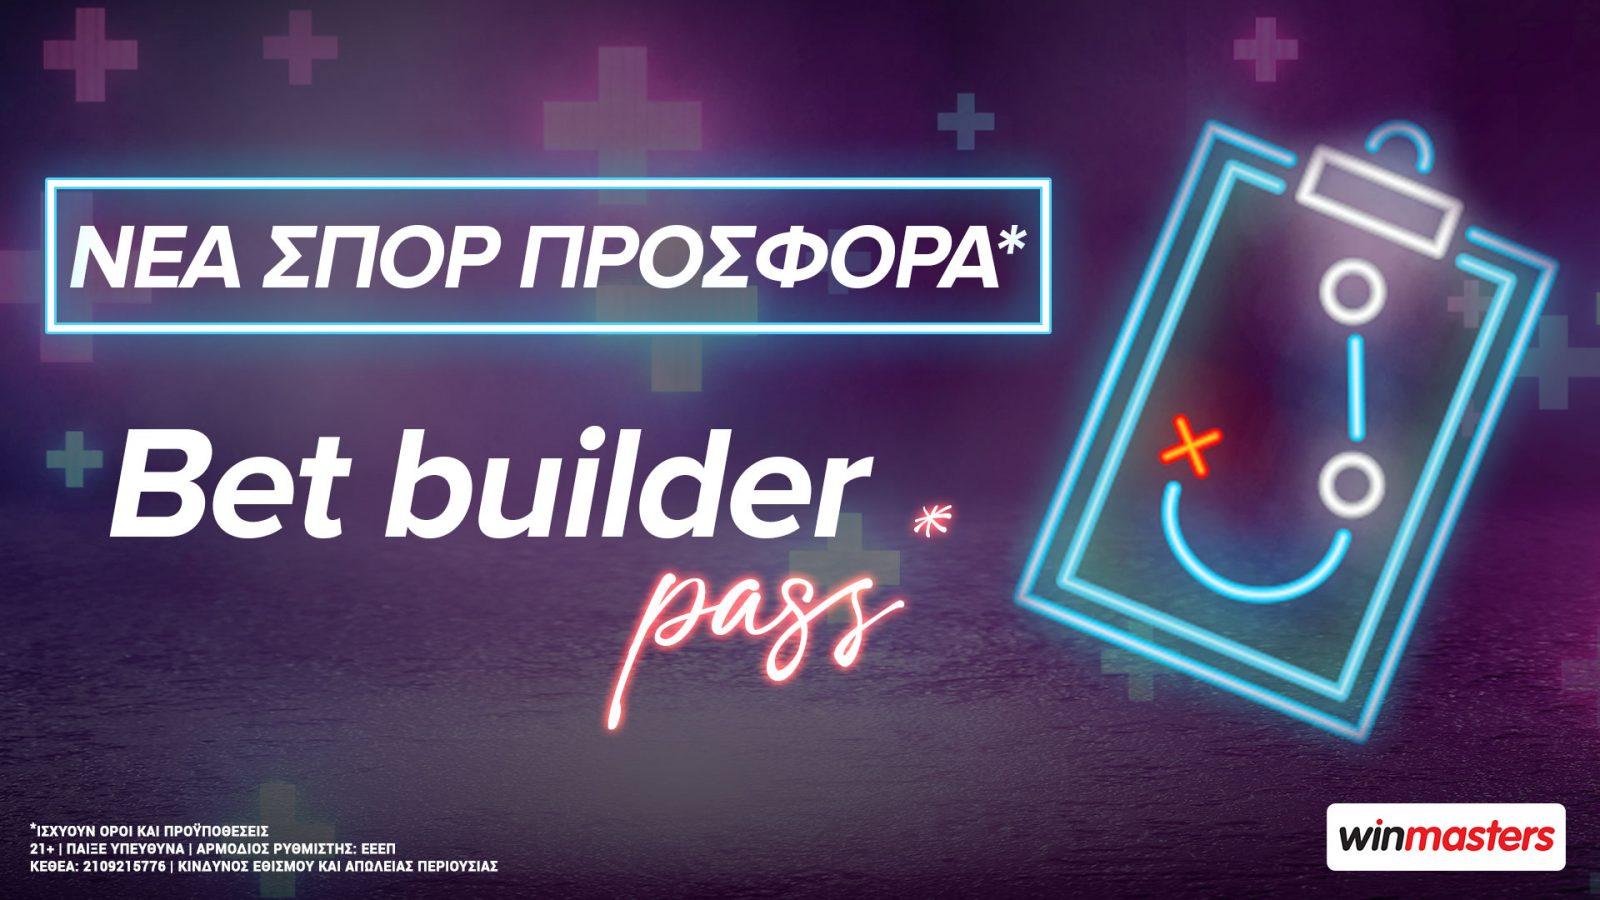 winmasters: Το Bet builder Pass* μόλις ήρθε!